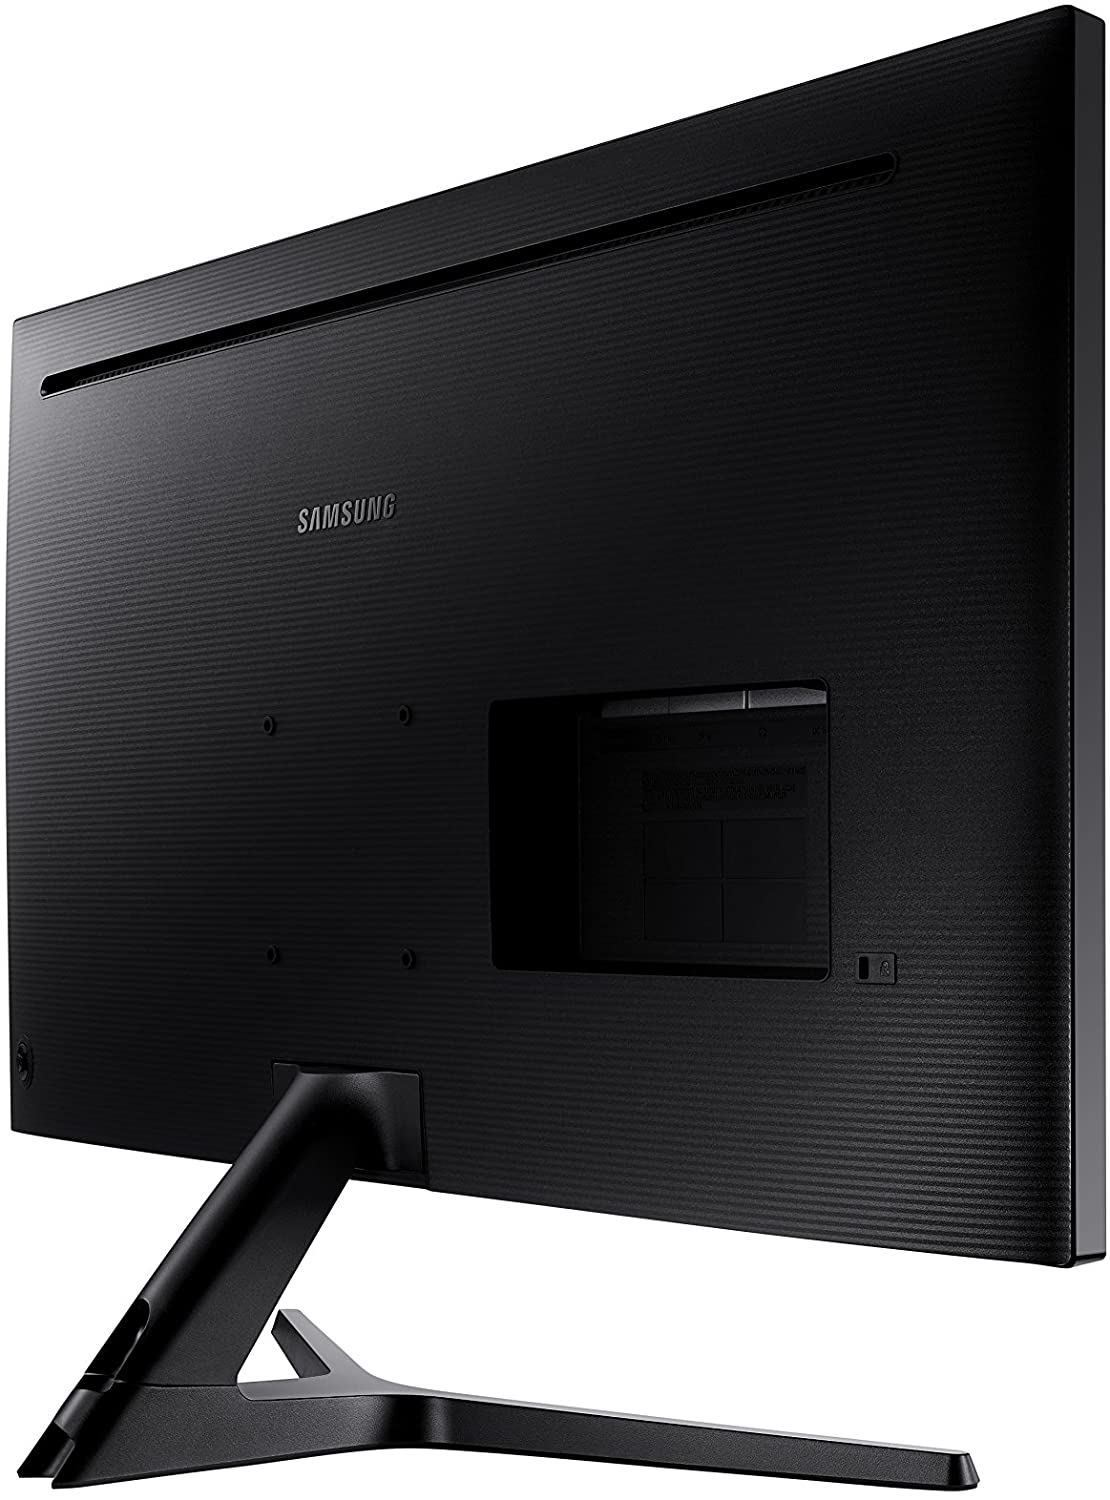 Samsung LU32J590UQNXZA-RB 32" UJ590 Series UHD Monitor - Certified Refurbished